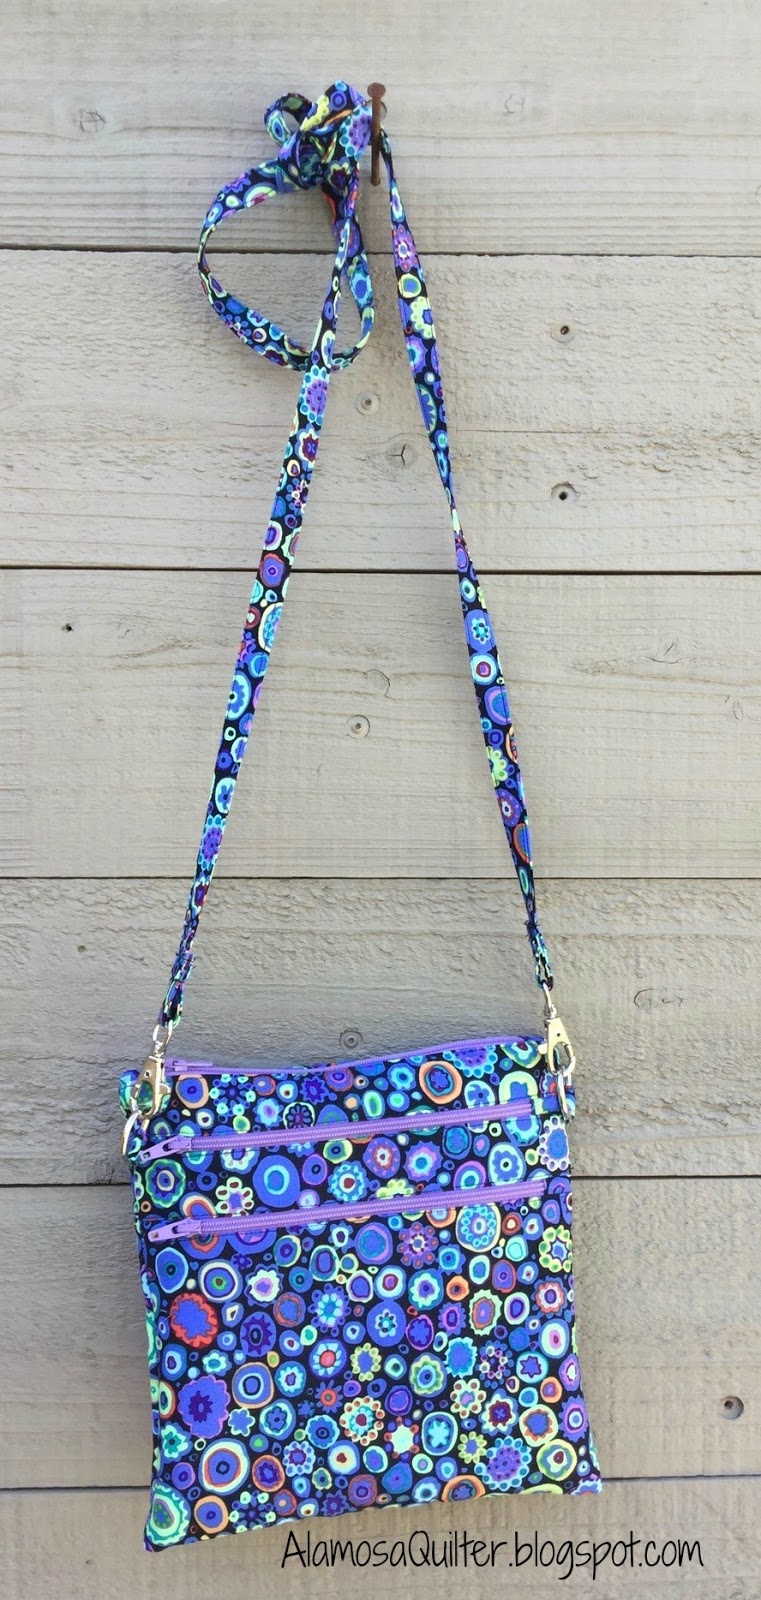 Alamosa Quilter: Zippy Crossbody Bag